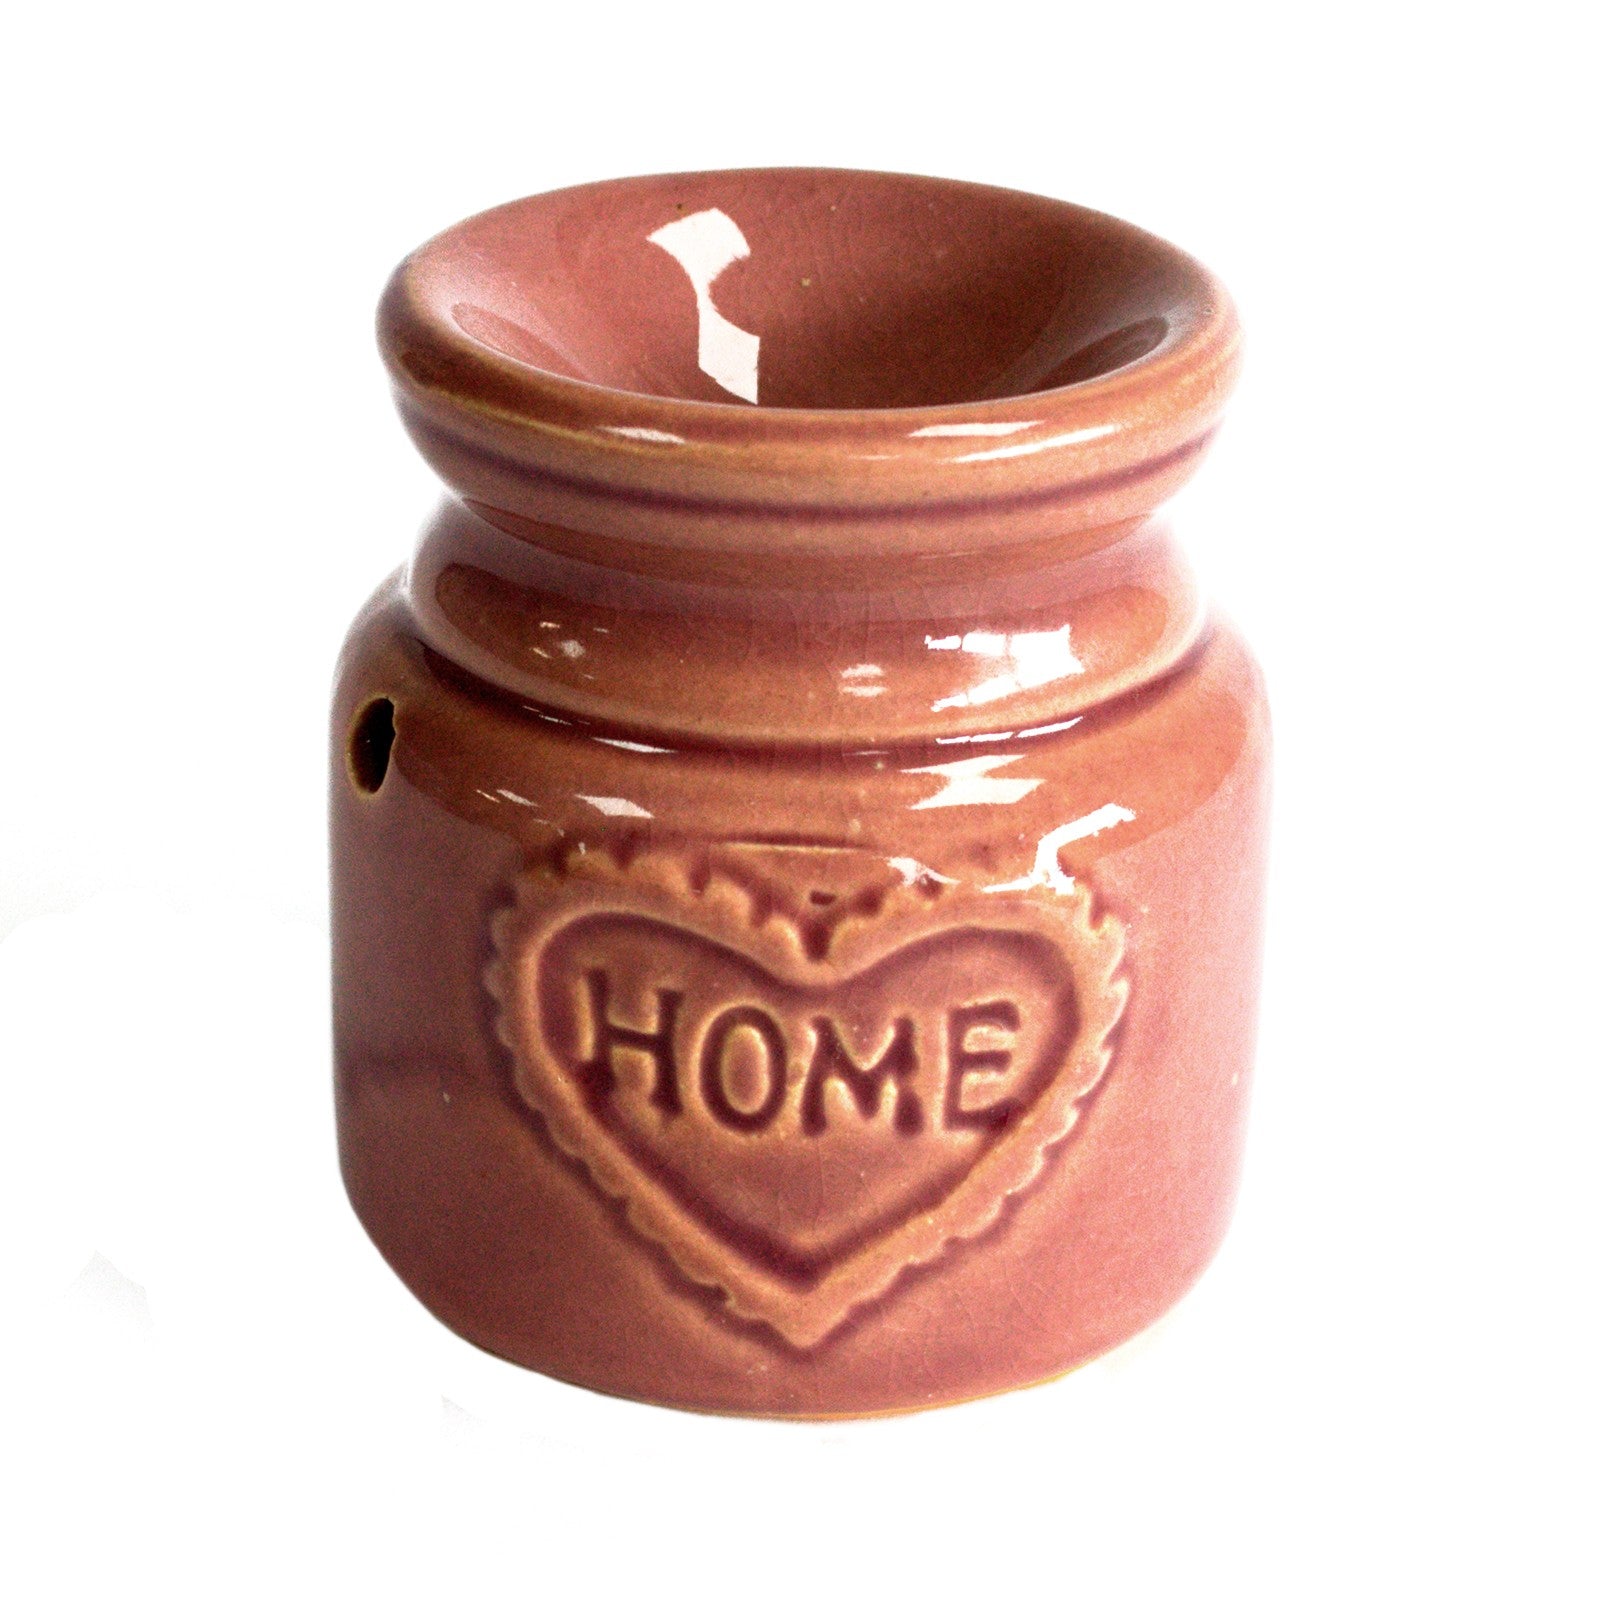 Sml Home Oil burner - Lavender - Home